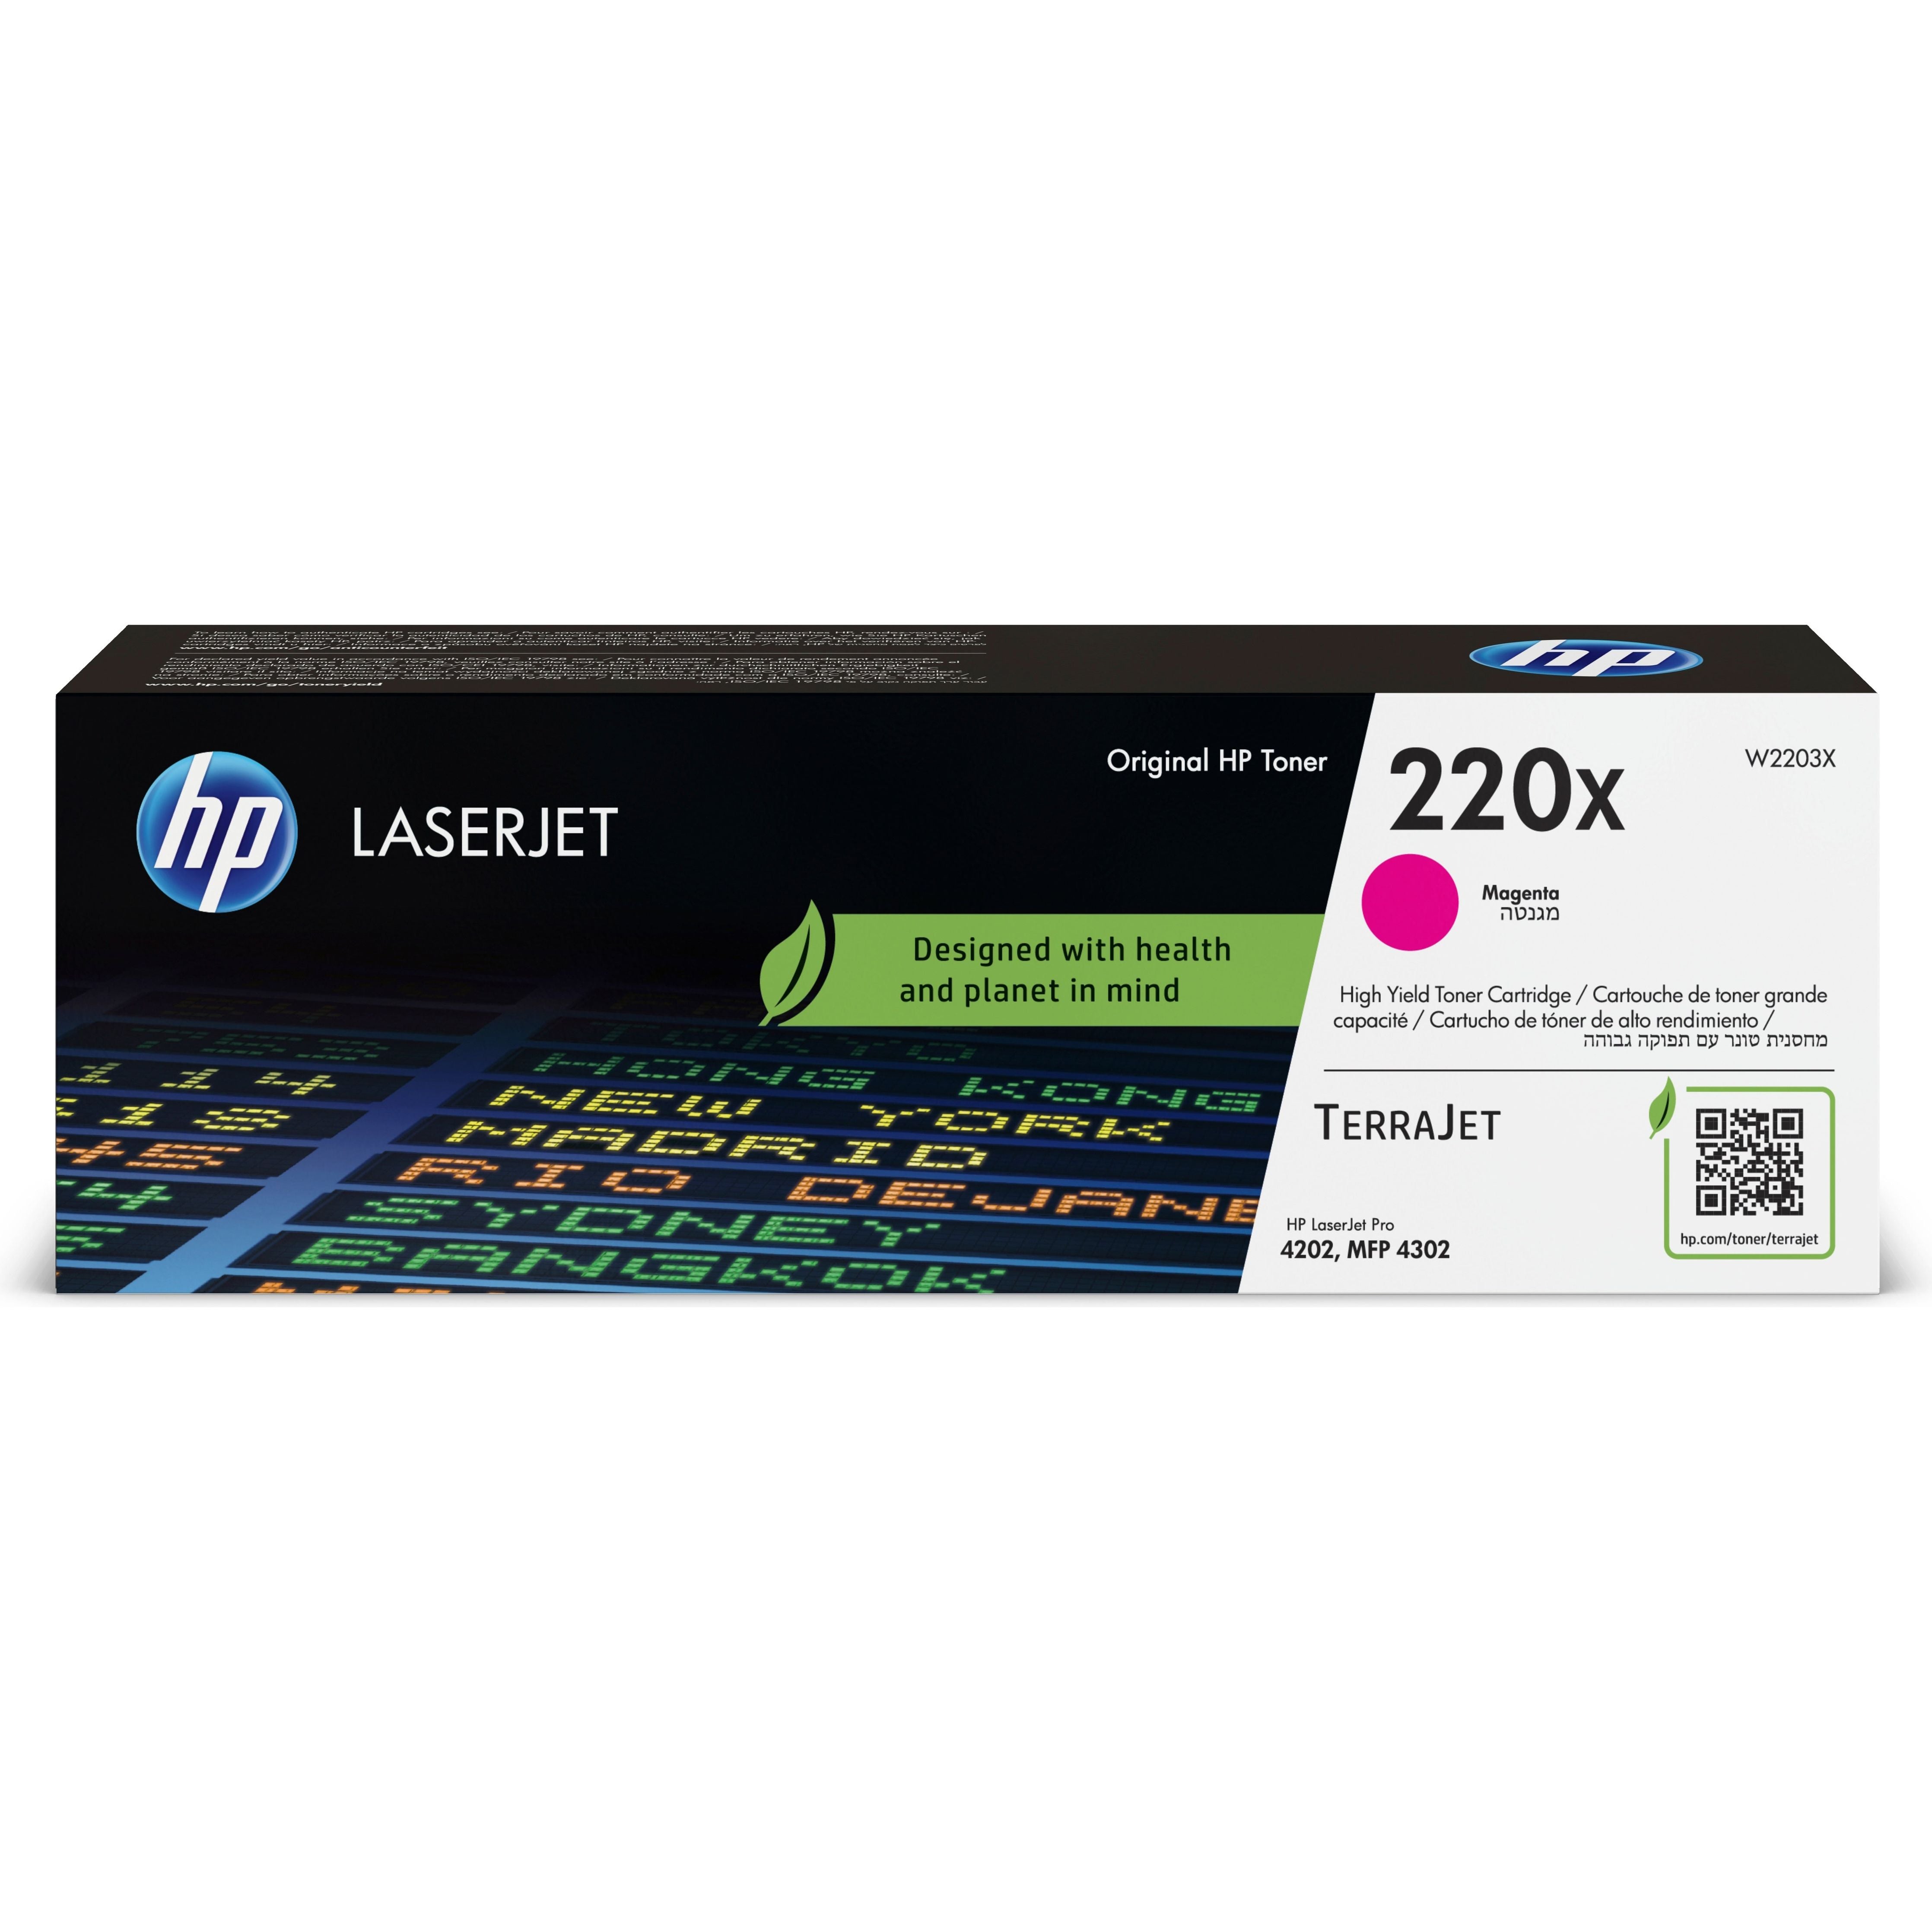 HP dufthylki Cart. W2301A (230A) for Color LaserJet Pro MFP 4302 Color LaserJet Pro 4202 blátt Standard Capacity